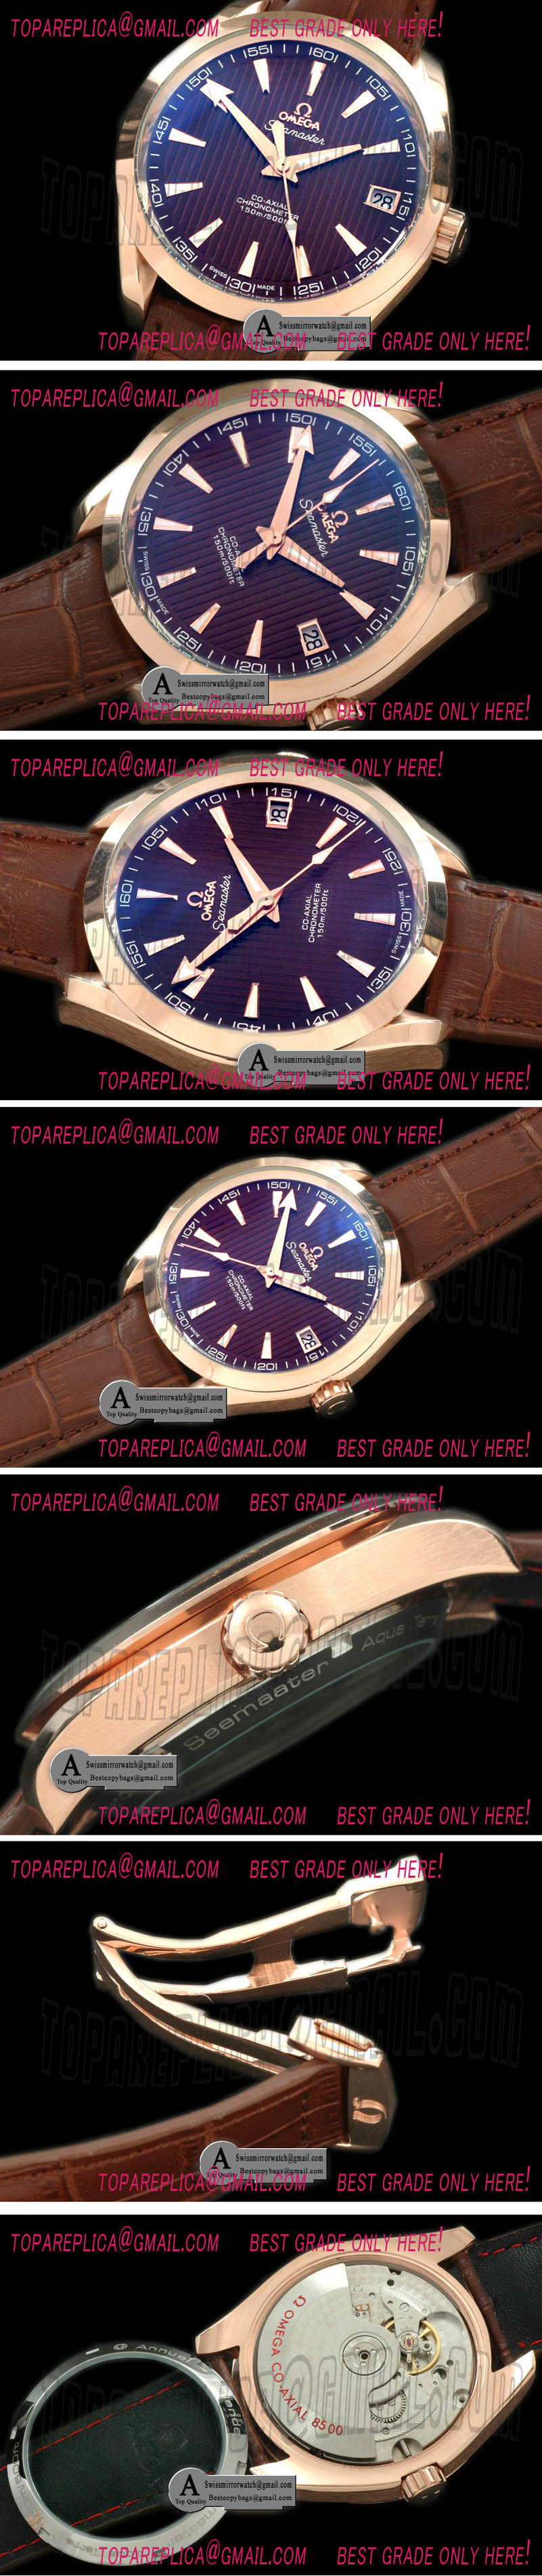 Omega 231.53.42.21.06.001 Aqua Terra Seamaster Rose Gold/Leather Brown Asian 2813 Replica Watches